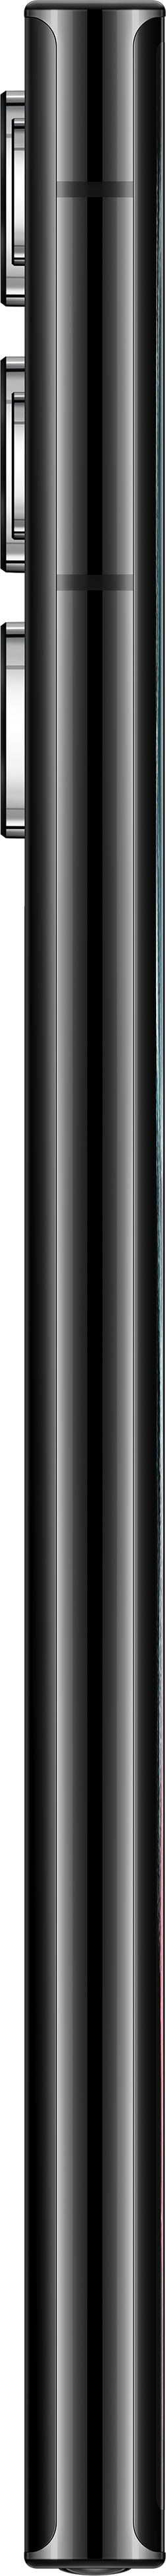 Samsung - Galaxy S22 Ultra 512GB - Phantom Black (AT&T)_4